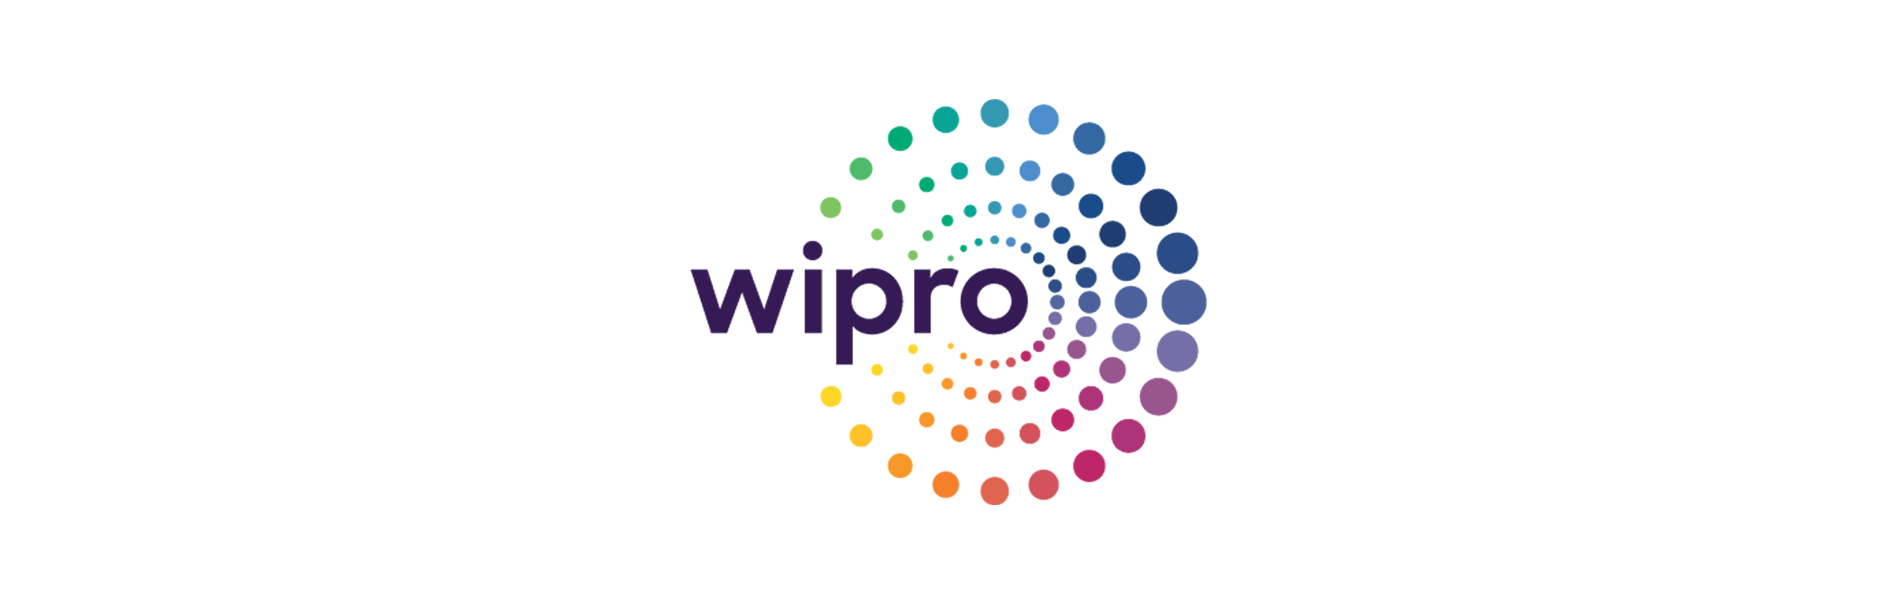 Digital Transformation in Mining Operation - Wipro